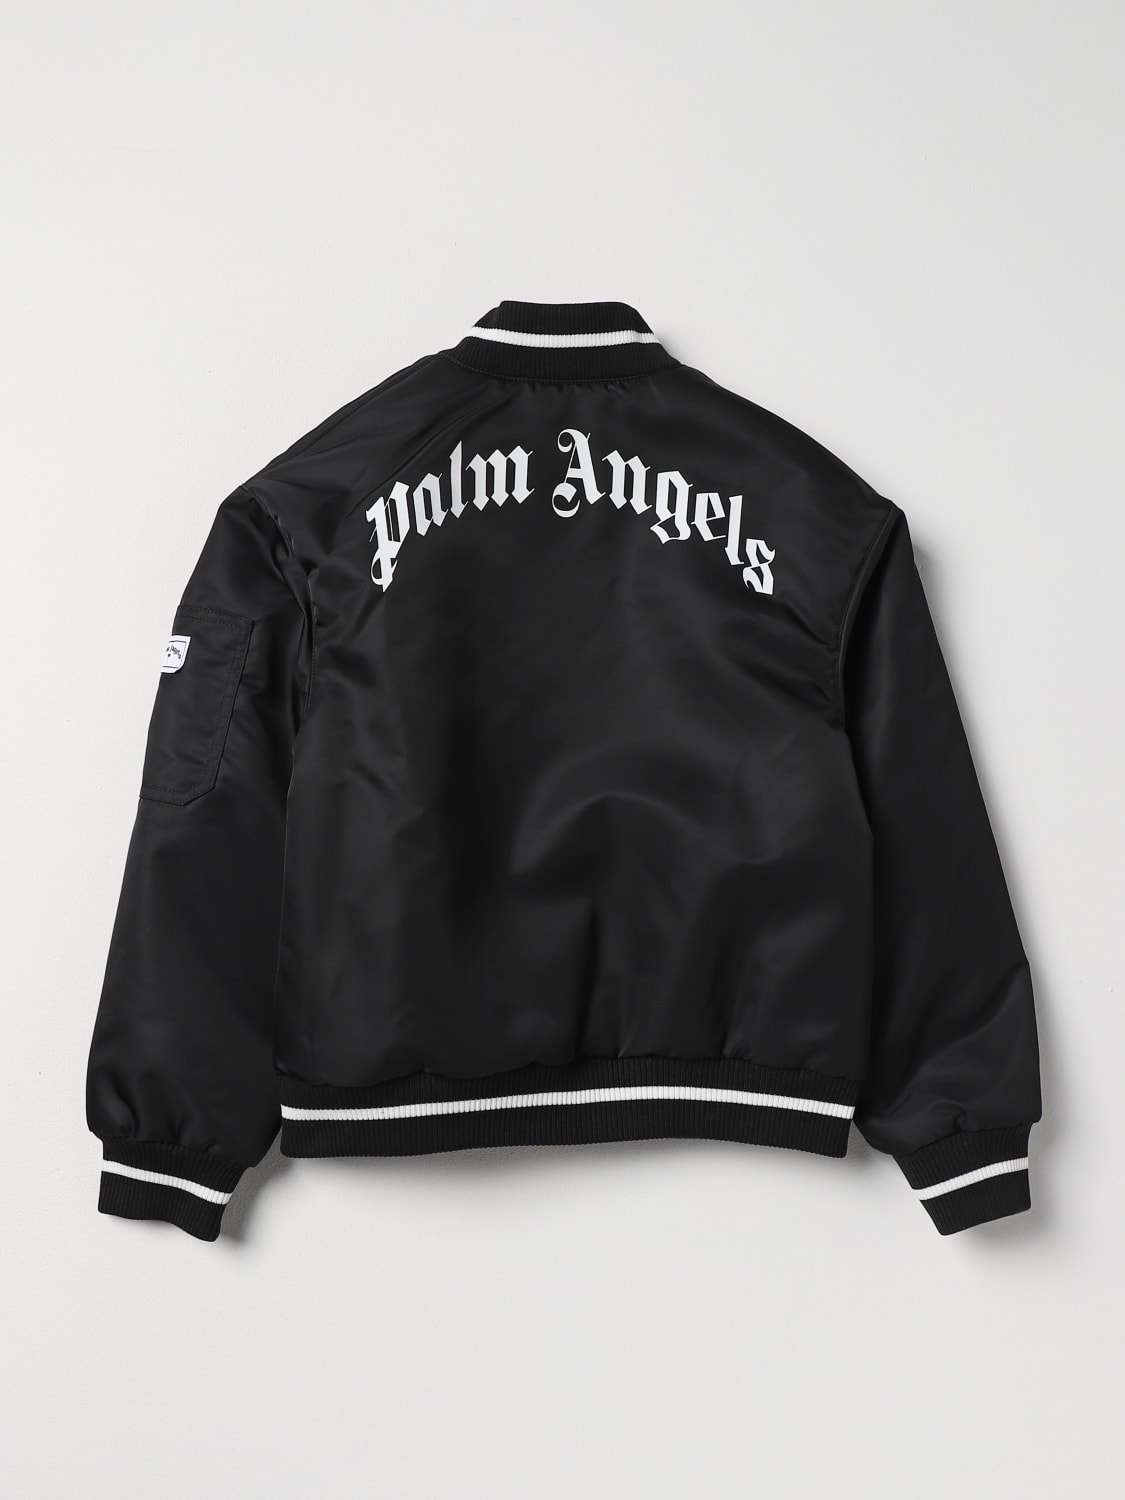 palm angels jacket - Coats & jackets